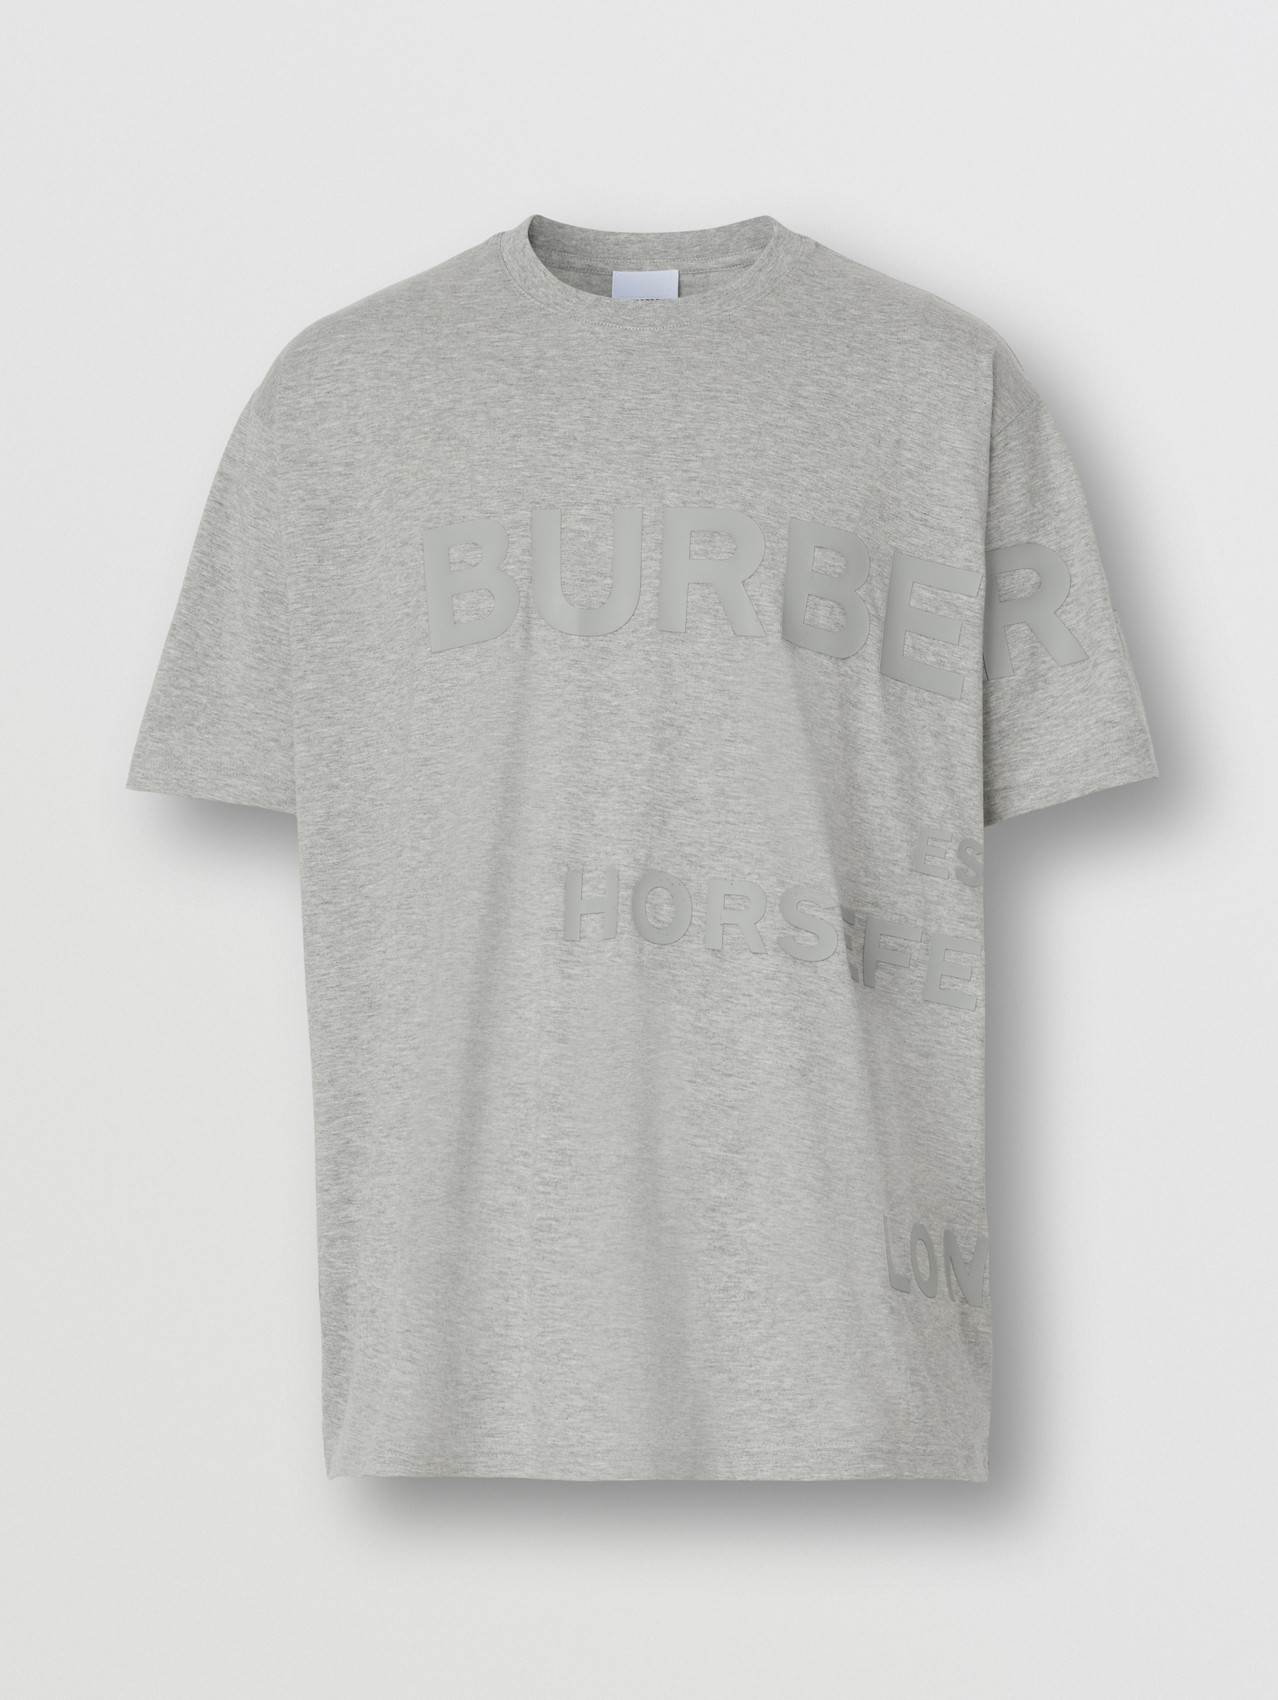 Camiseta oversize de algodão com estampa Horseferry in Cinza Claro Mesclado